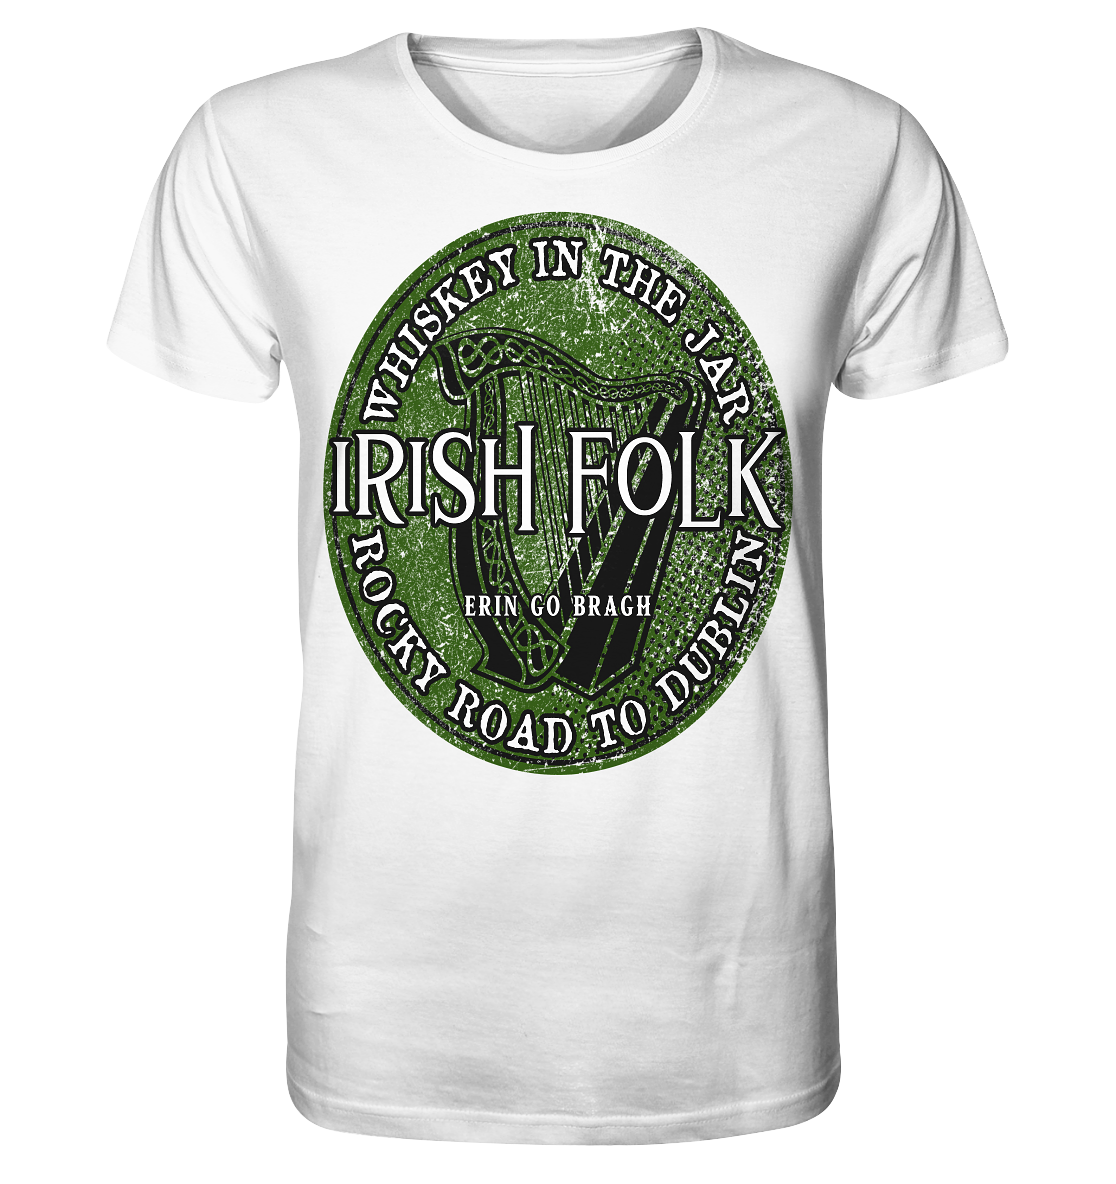 Irish Folk "Erin Go Bragh" - Organic Shirt